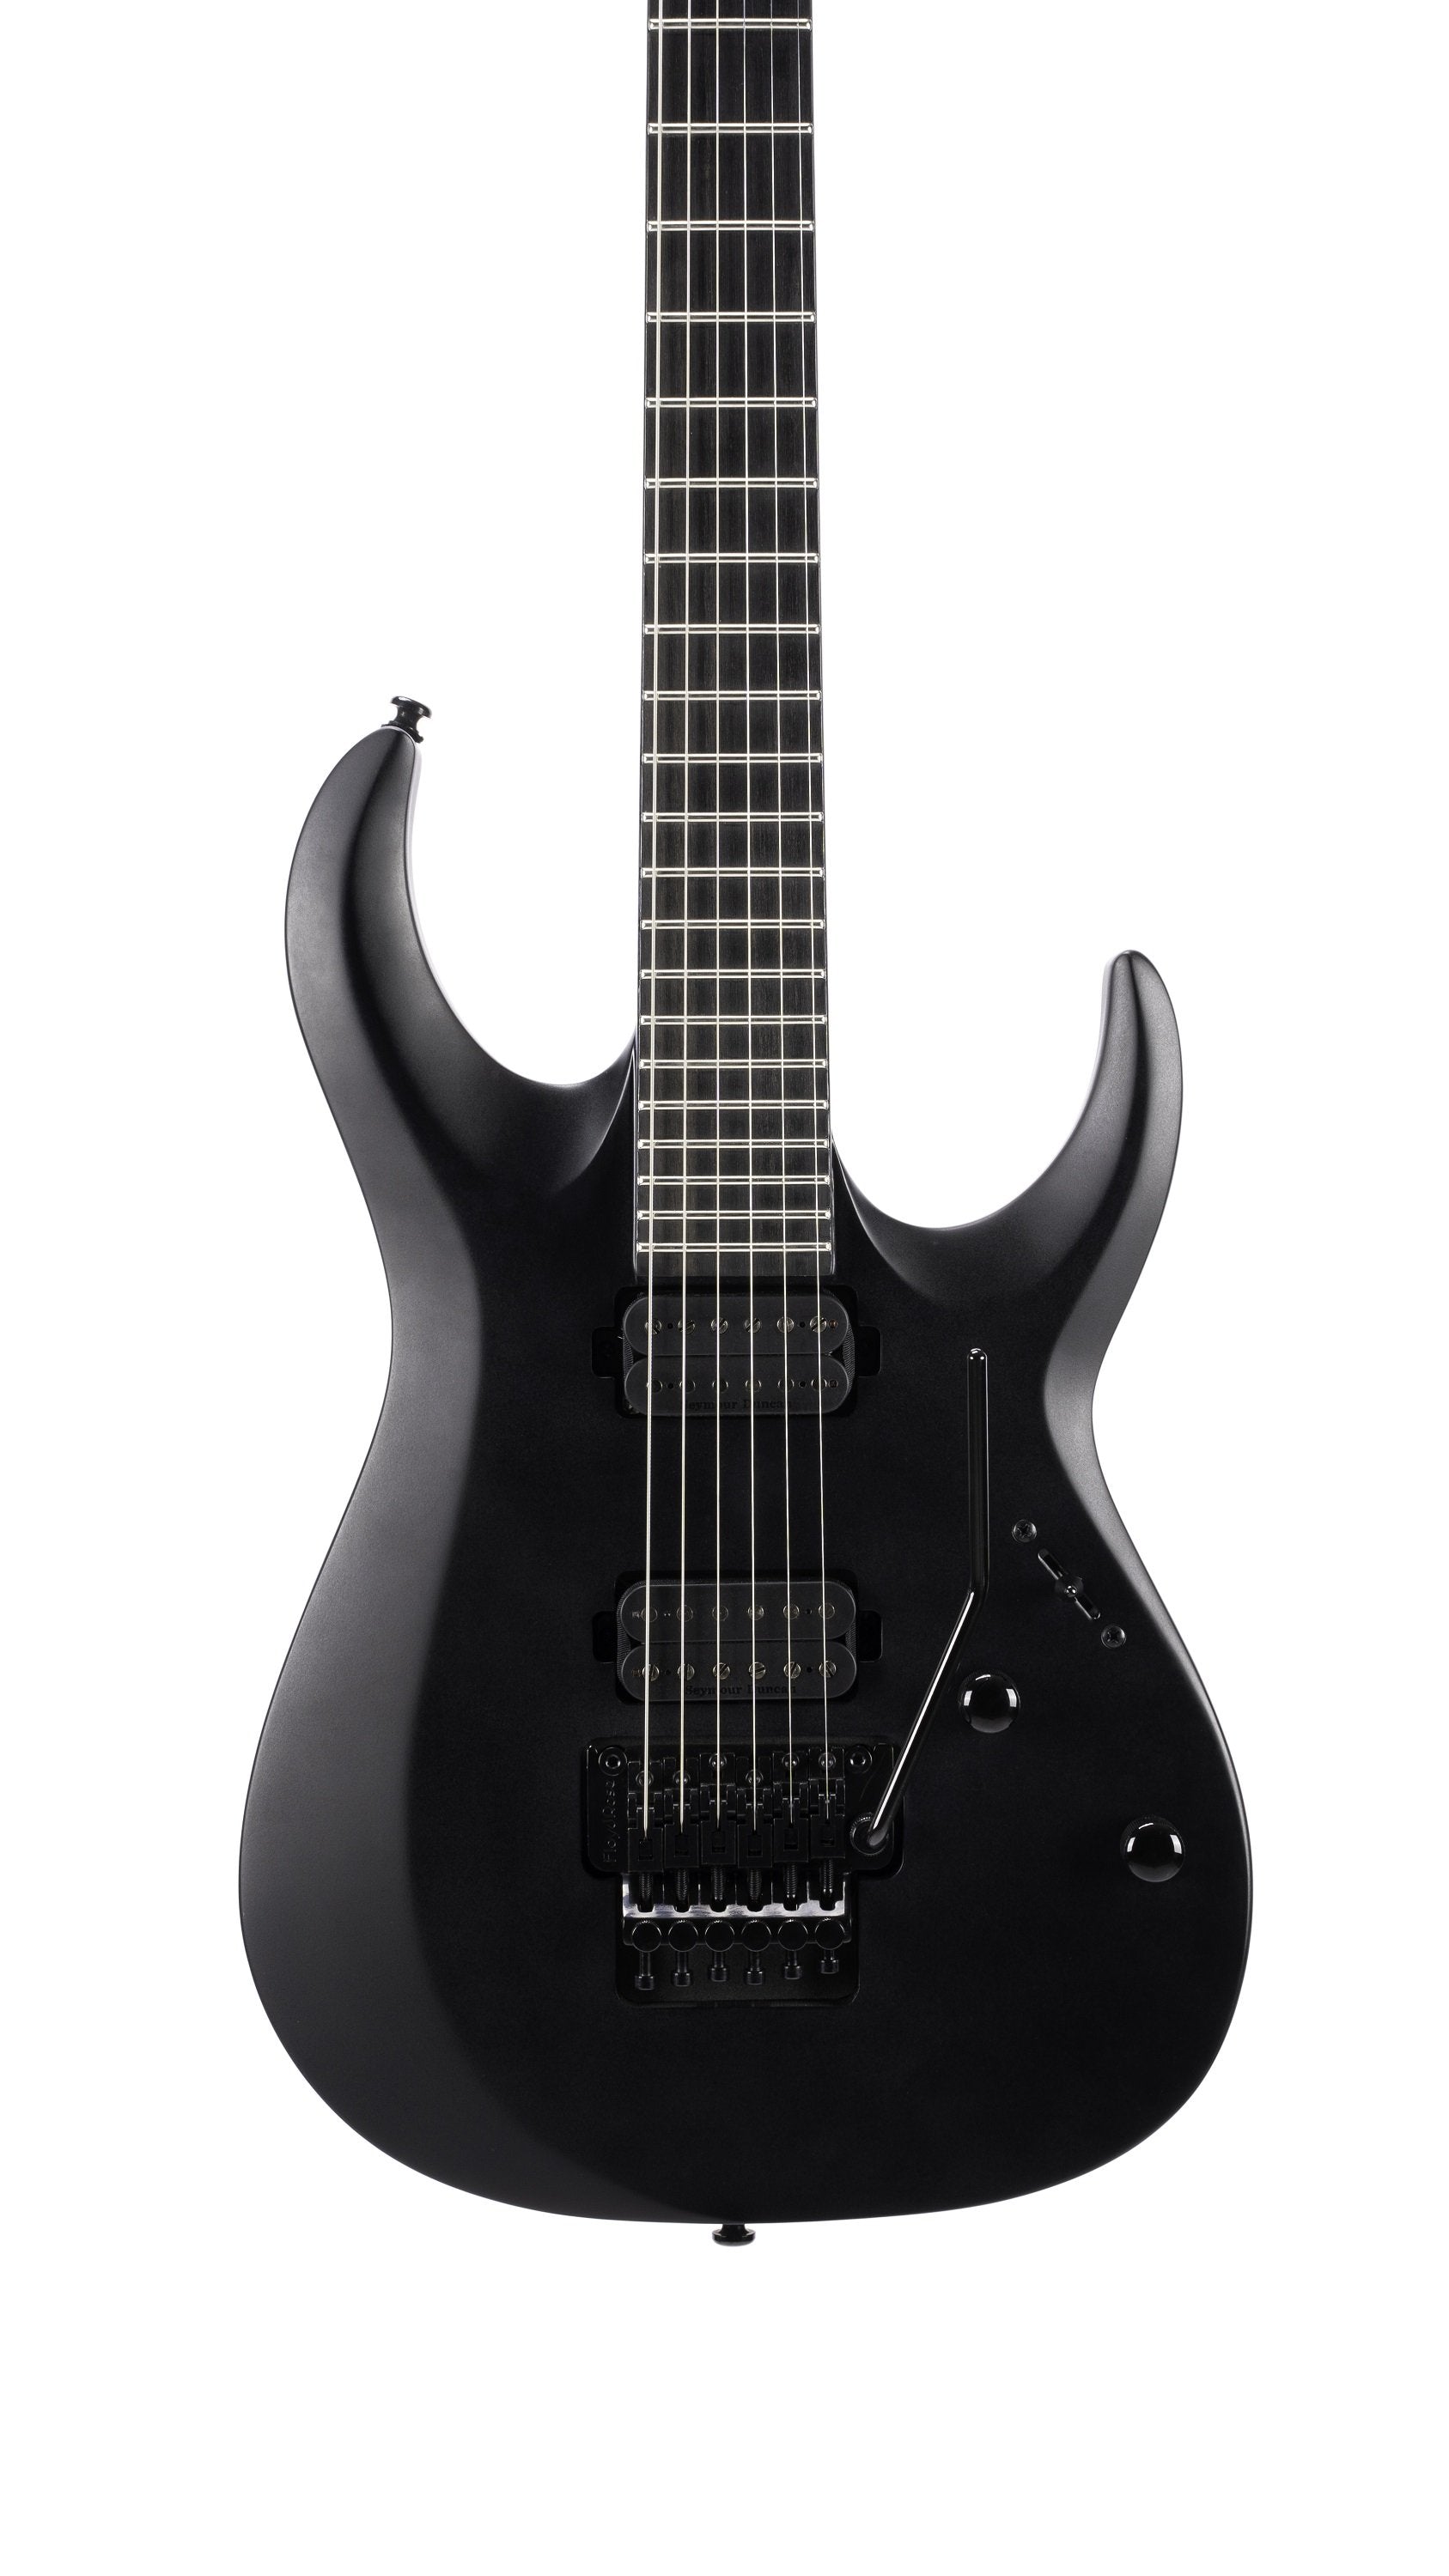 Cort X500 Menace Black Satin, Electric Guitar for sale at Richards Guitars.